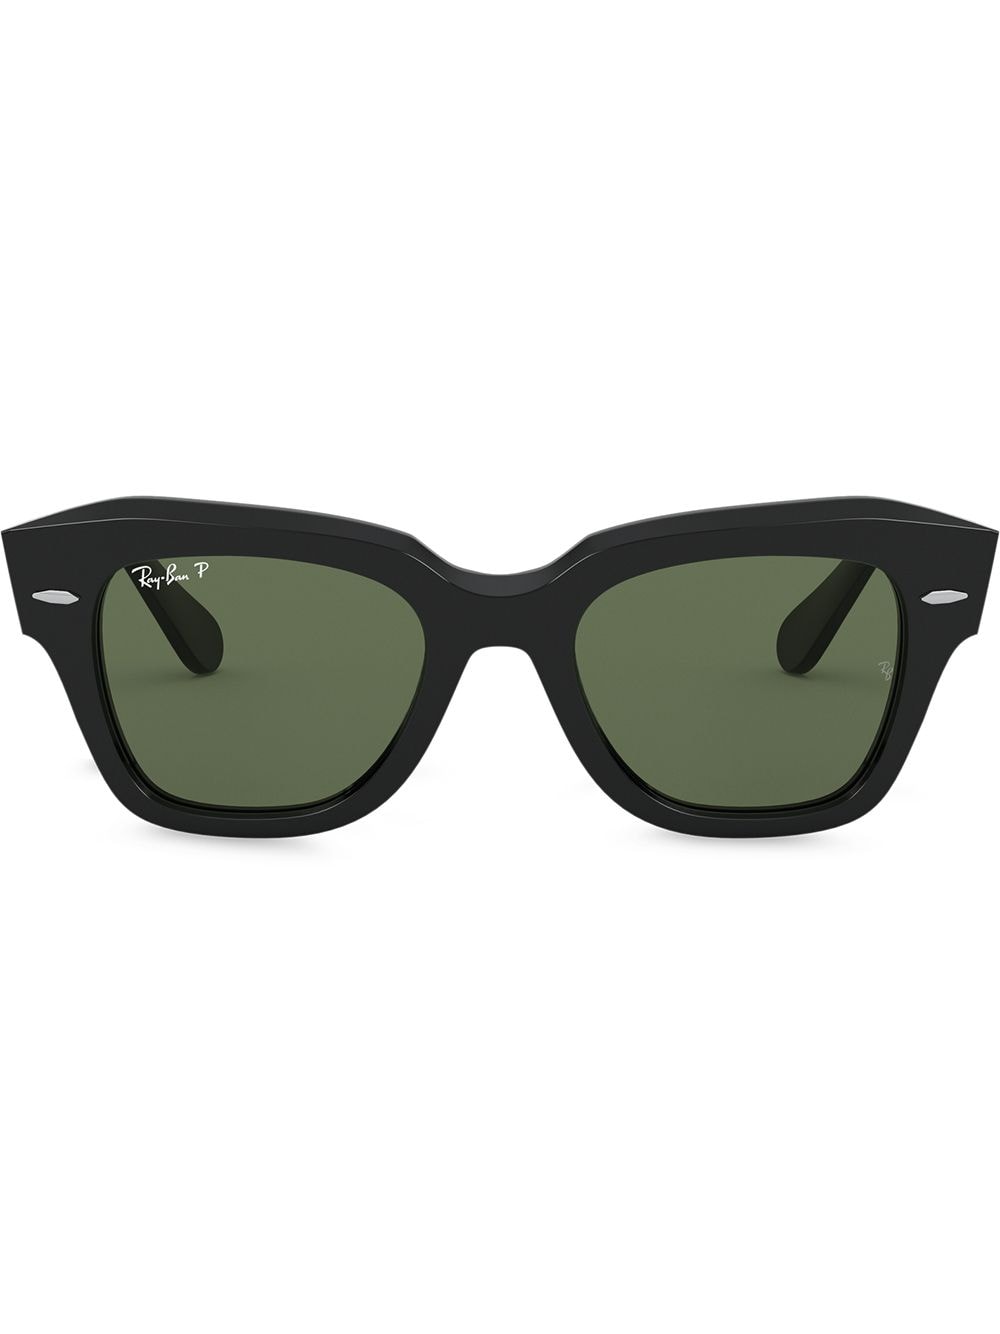 Ray-Ban State Street sunglasses - Black von Ray-Ban